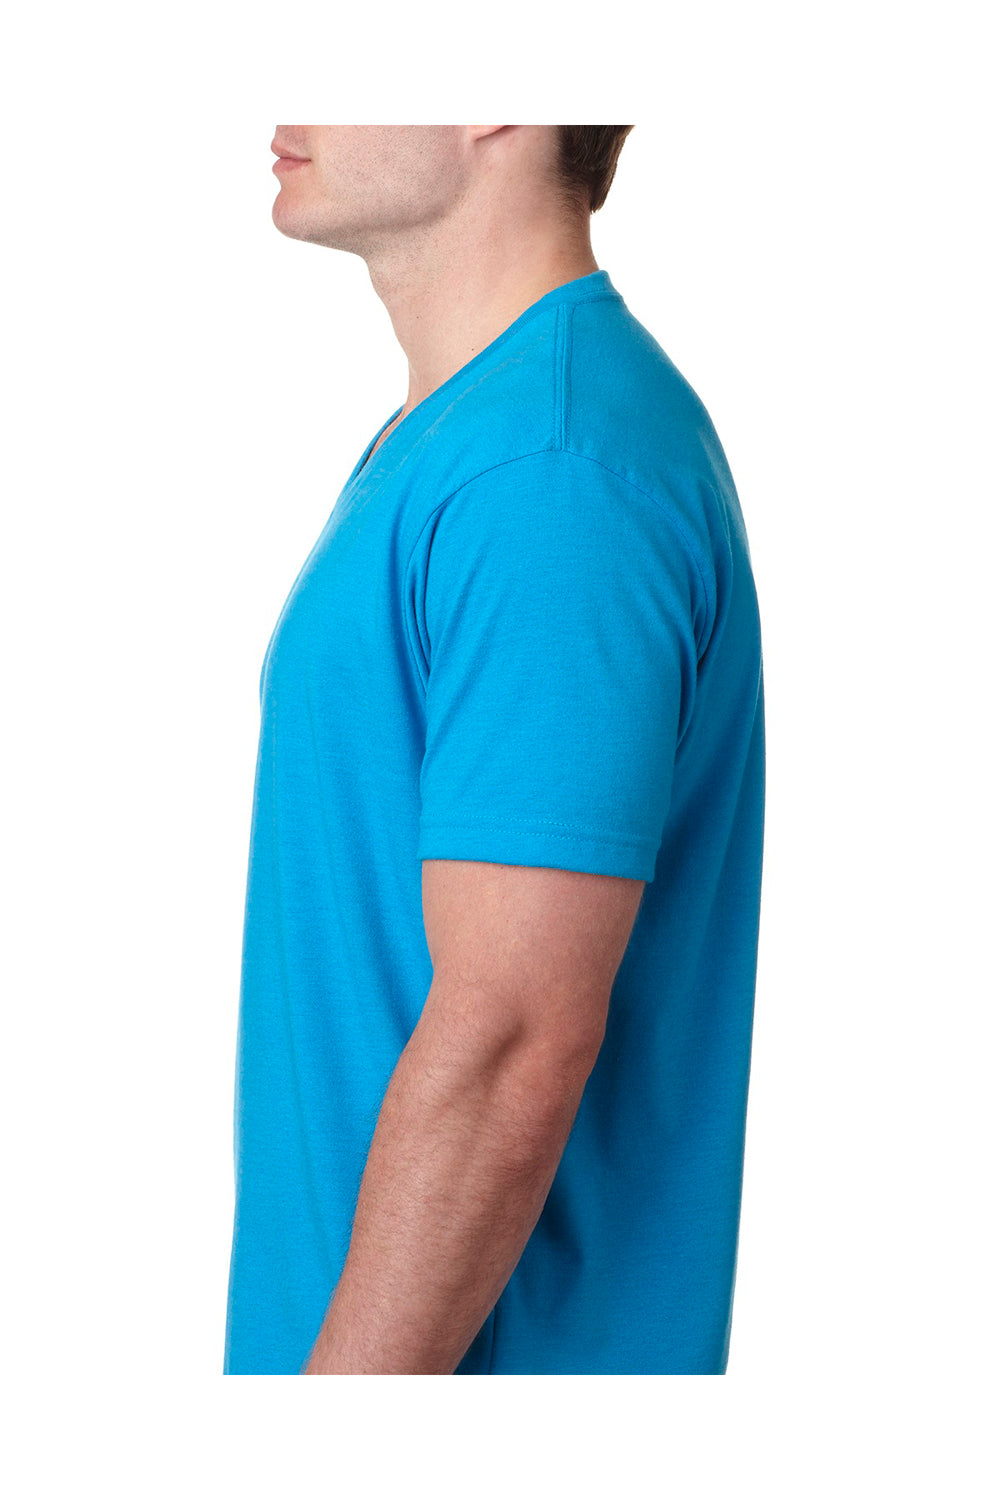 Next Level 6240 Mens CVC Jersey Short Sleeve V-Neck T-Shirt Turquoise Blue Side